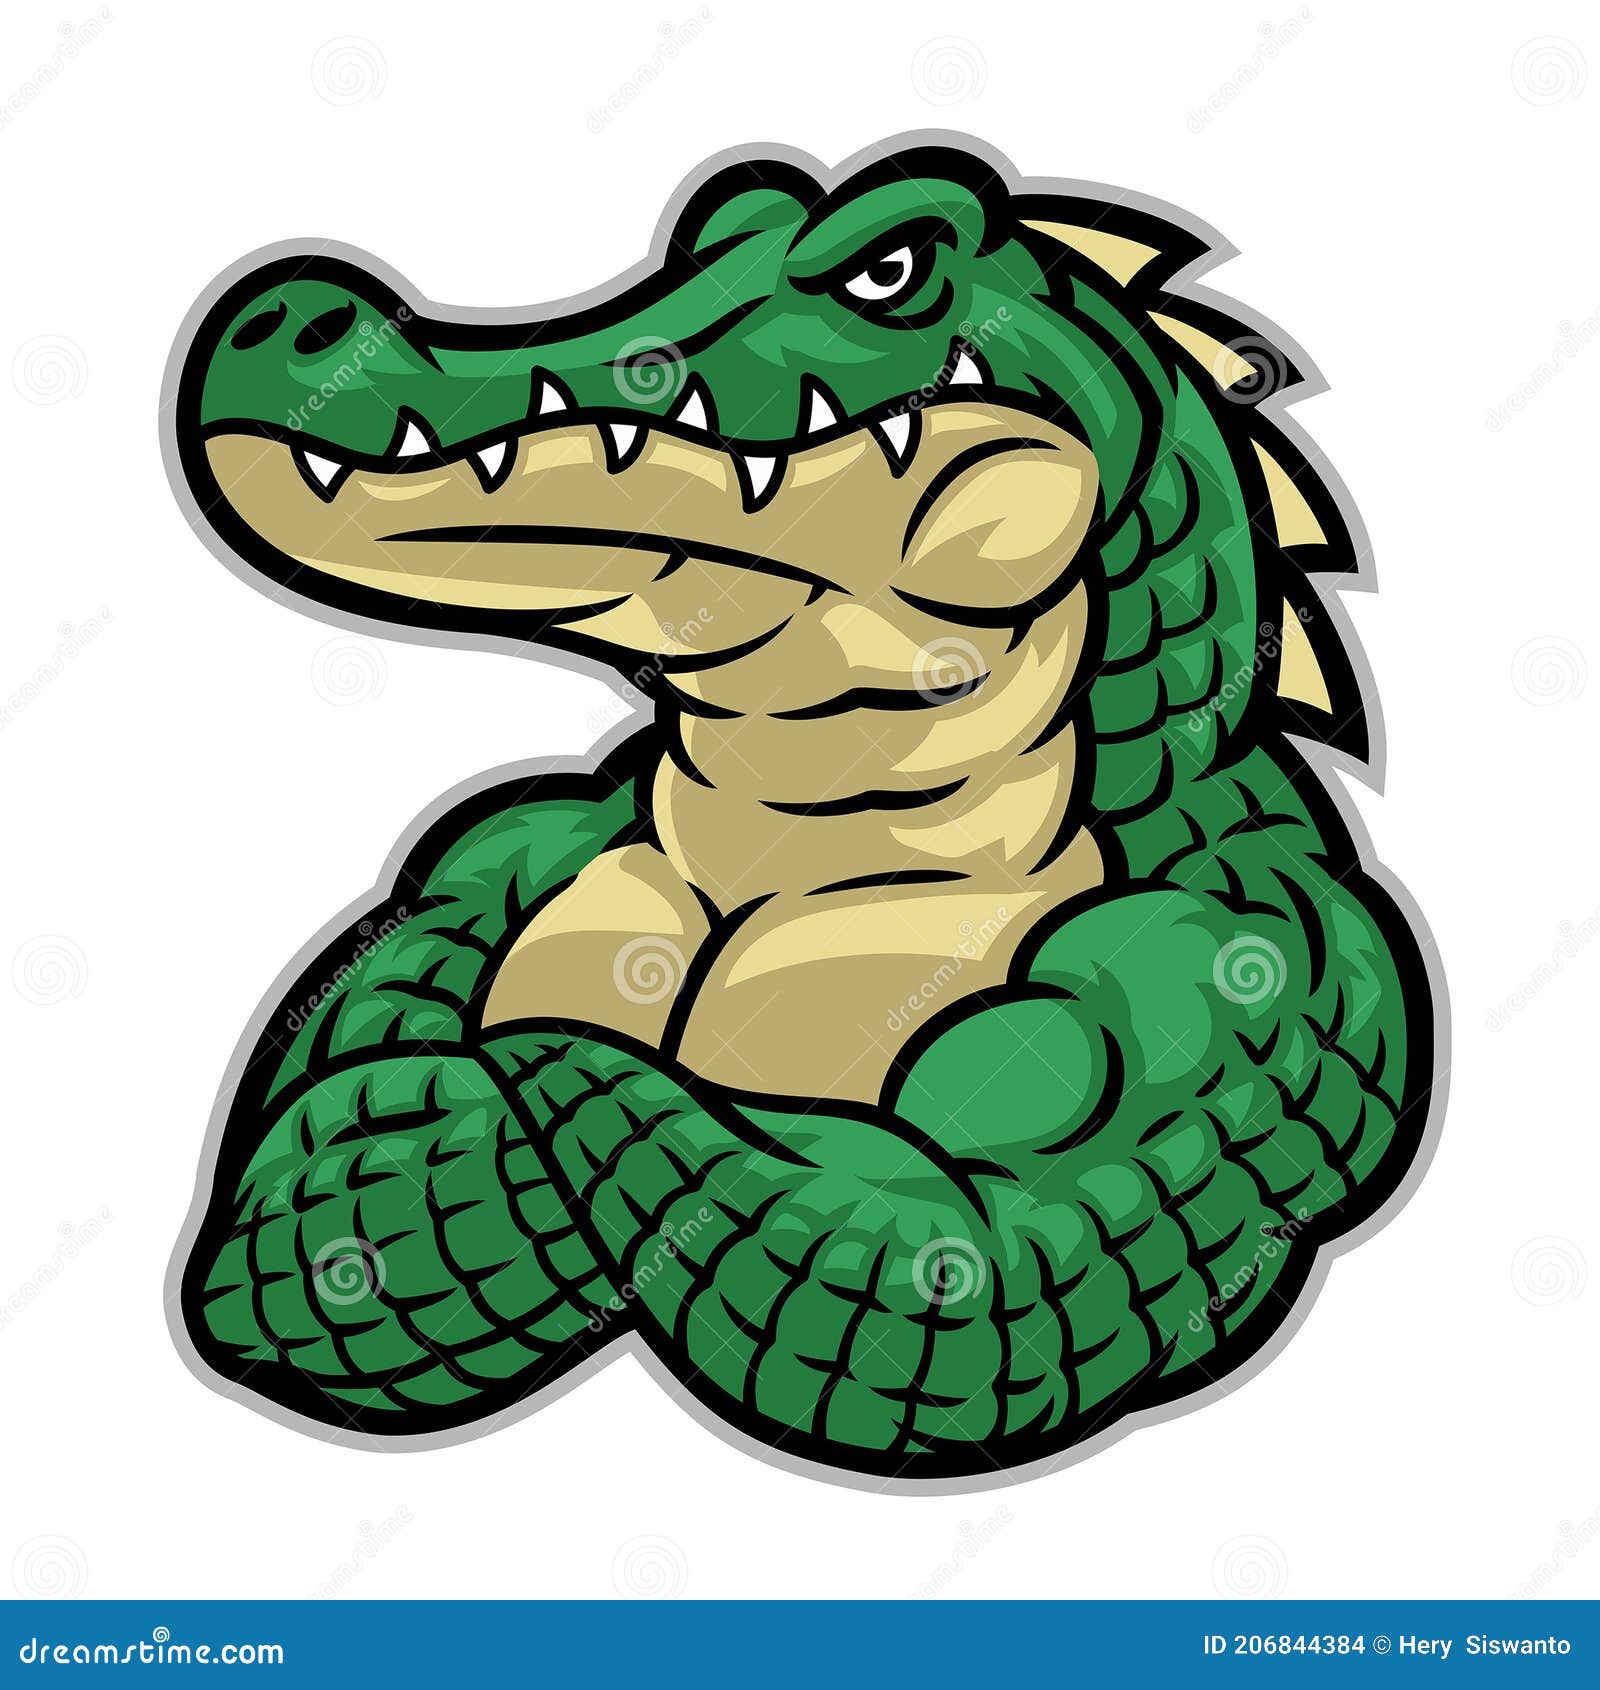 crocodile mascot with huge muscle body